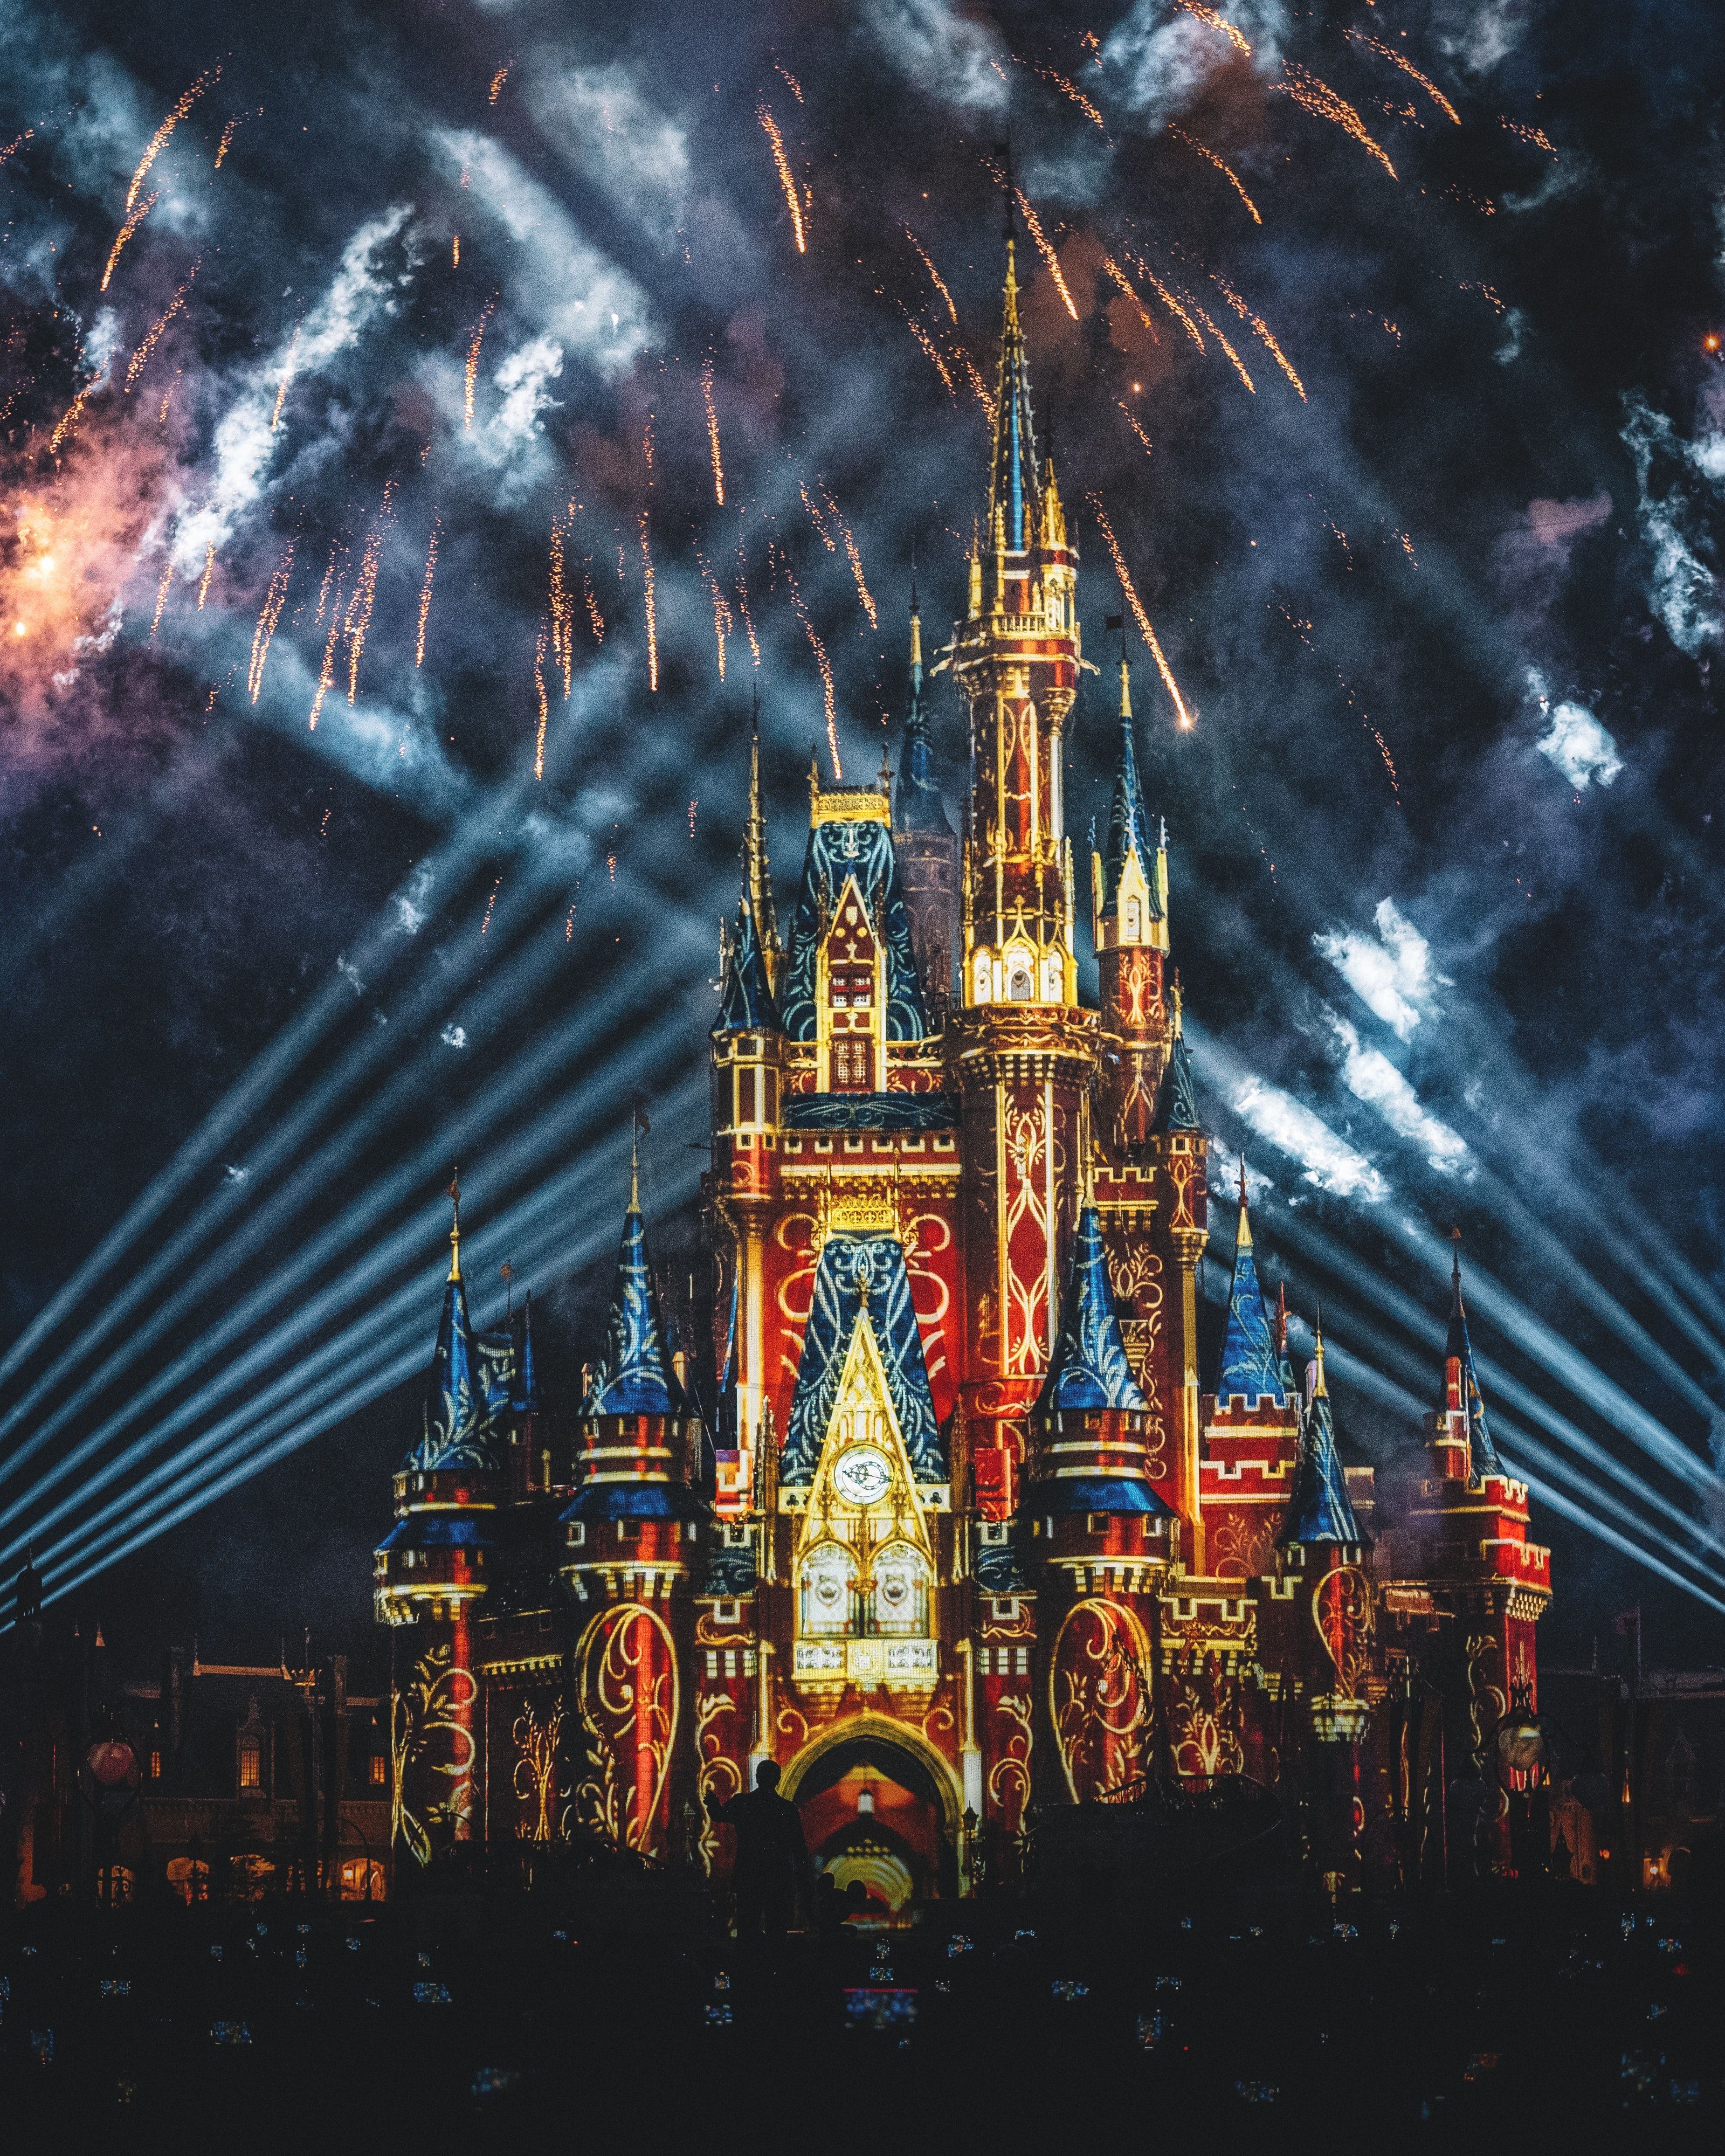 Fireworks light up the sky behind the lit-up castle at Disney World. - Castle